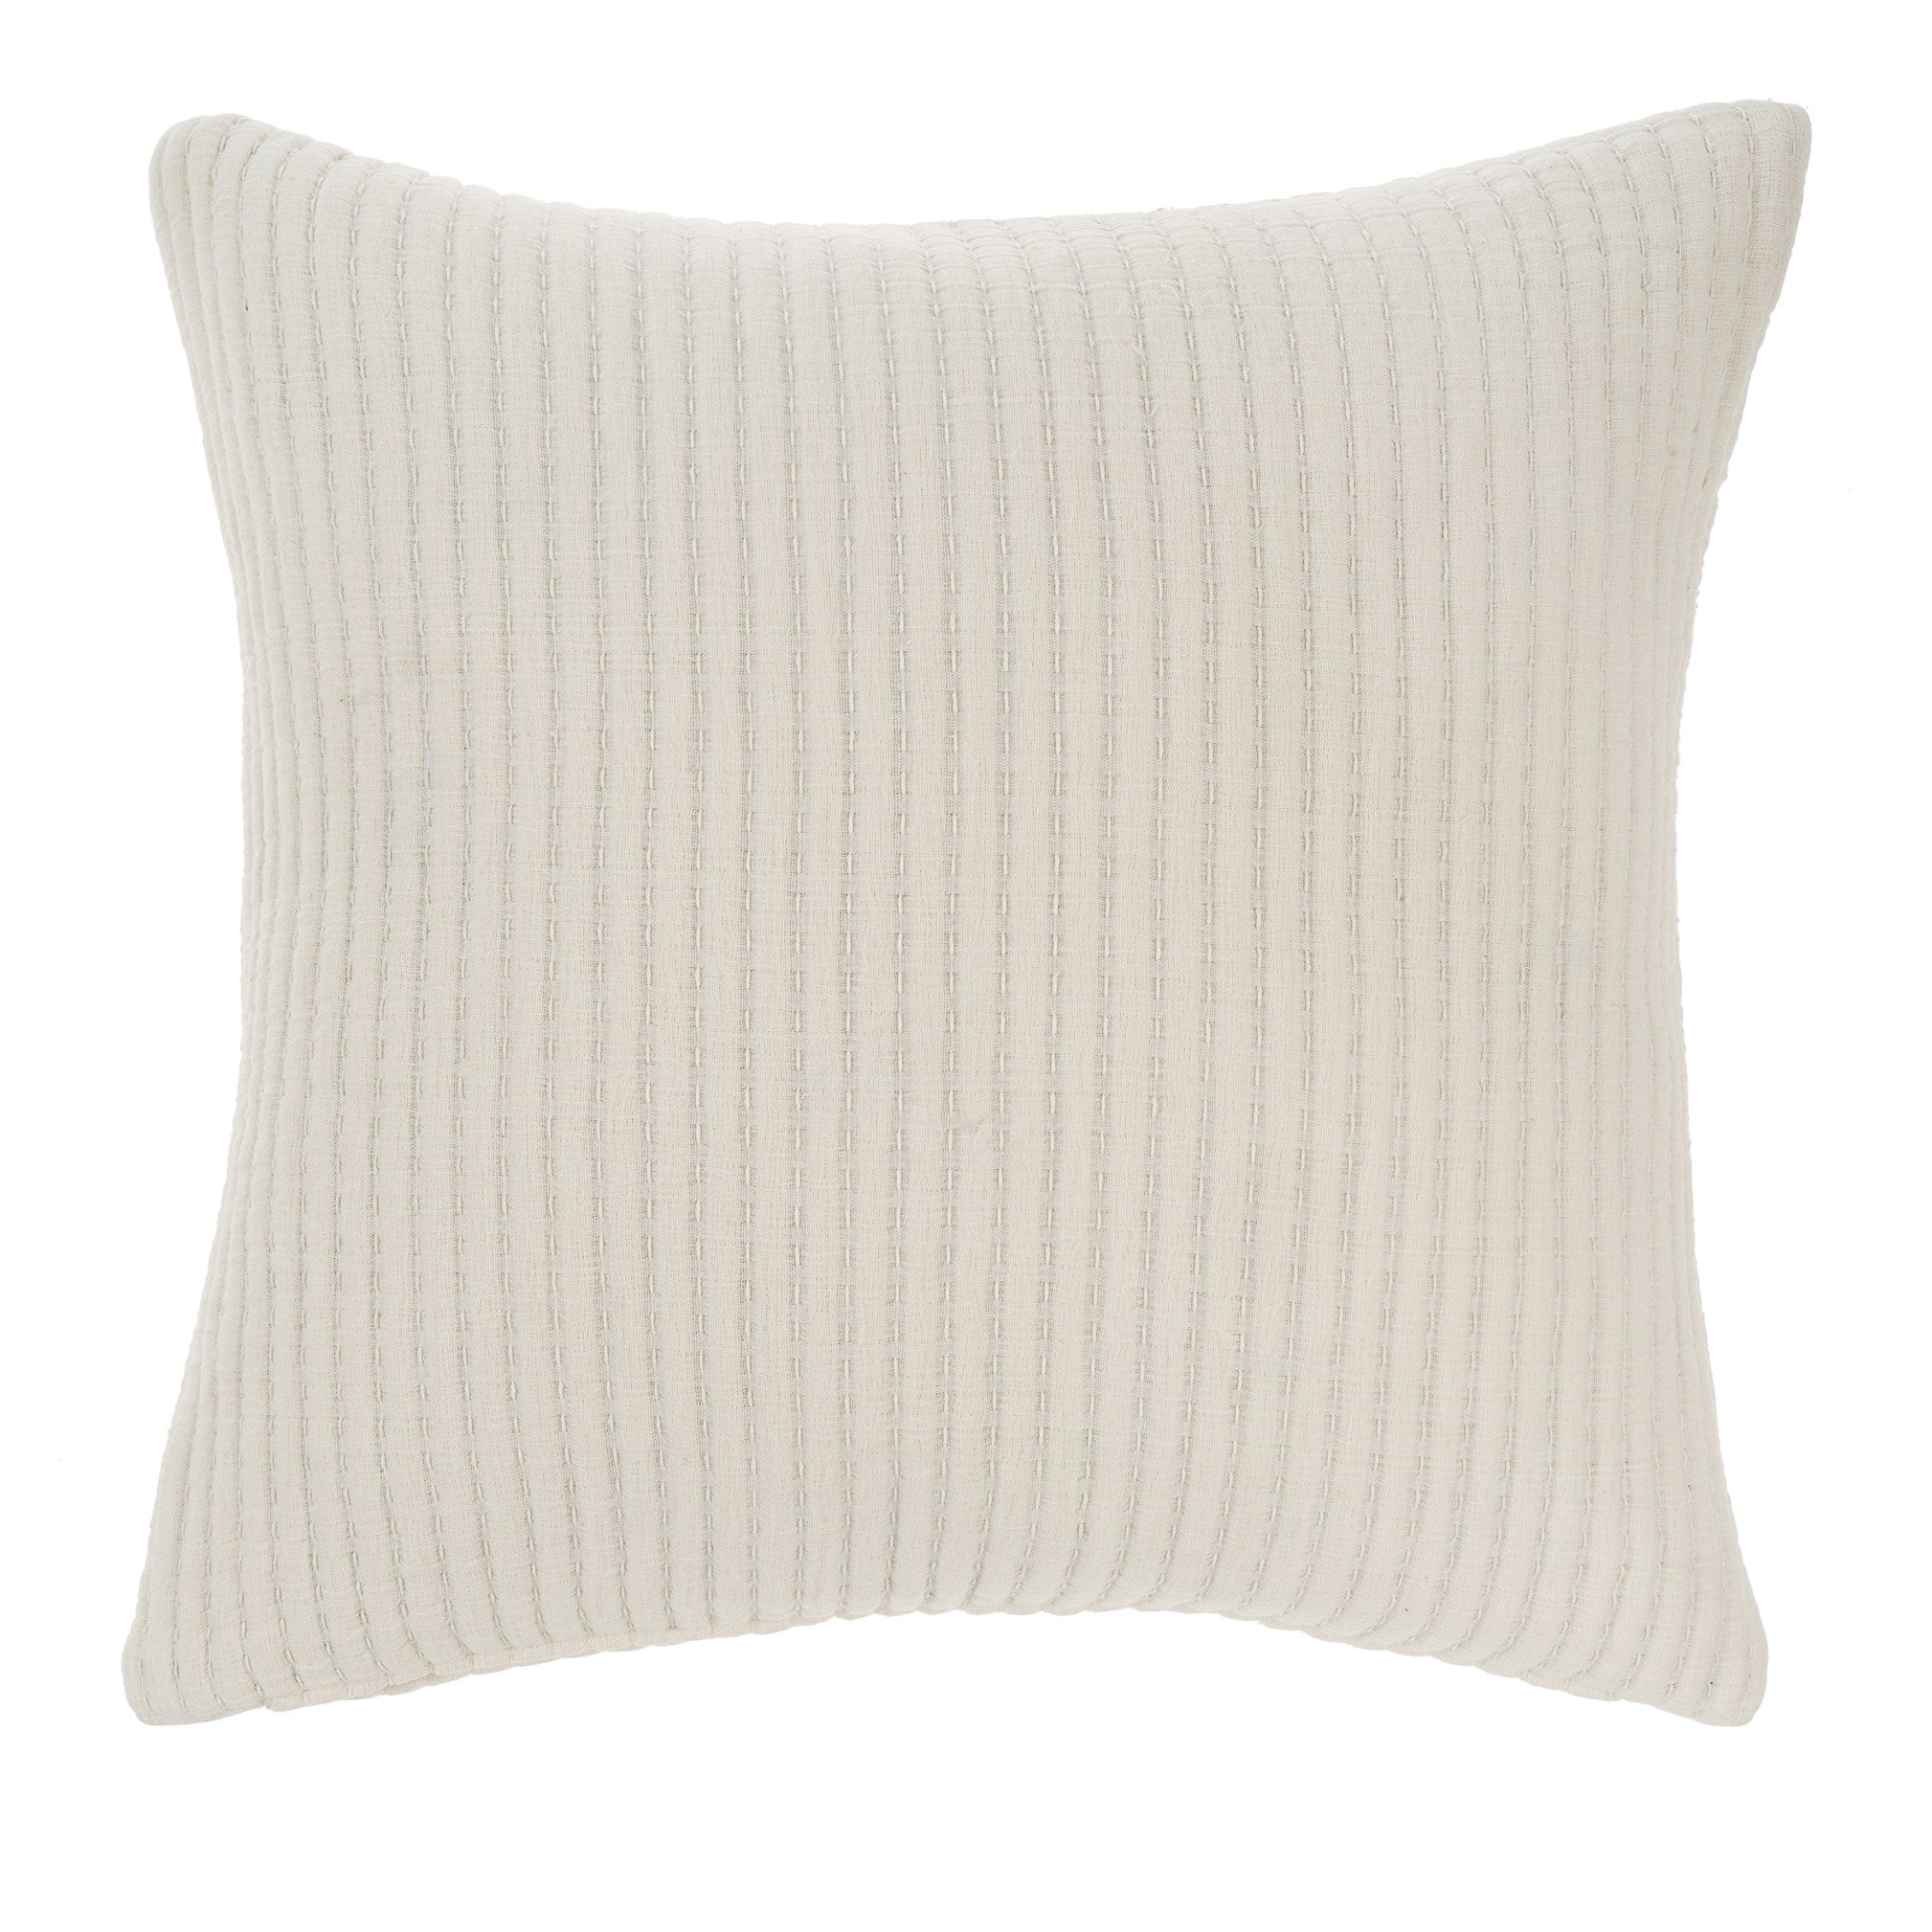 Stitch Pillow White, 24 x24